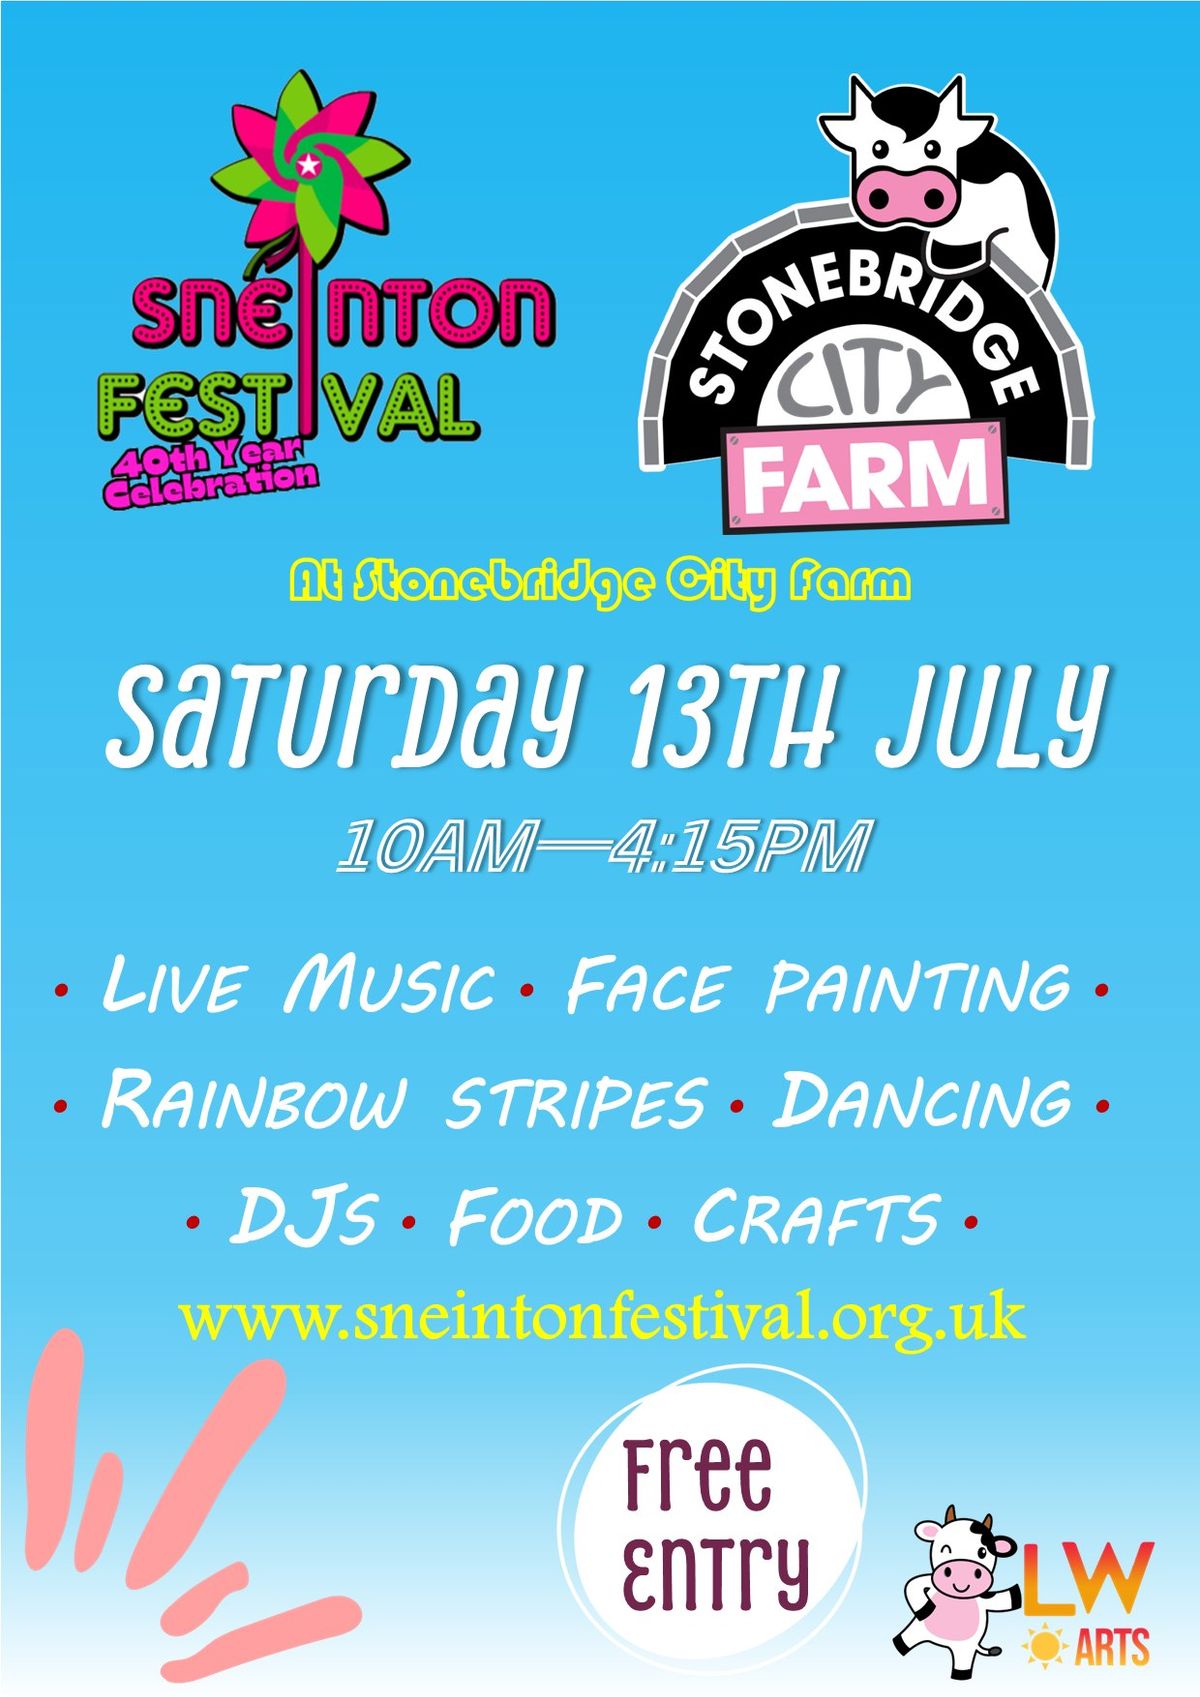 Sneinton Festival at Stonebridge City Farm